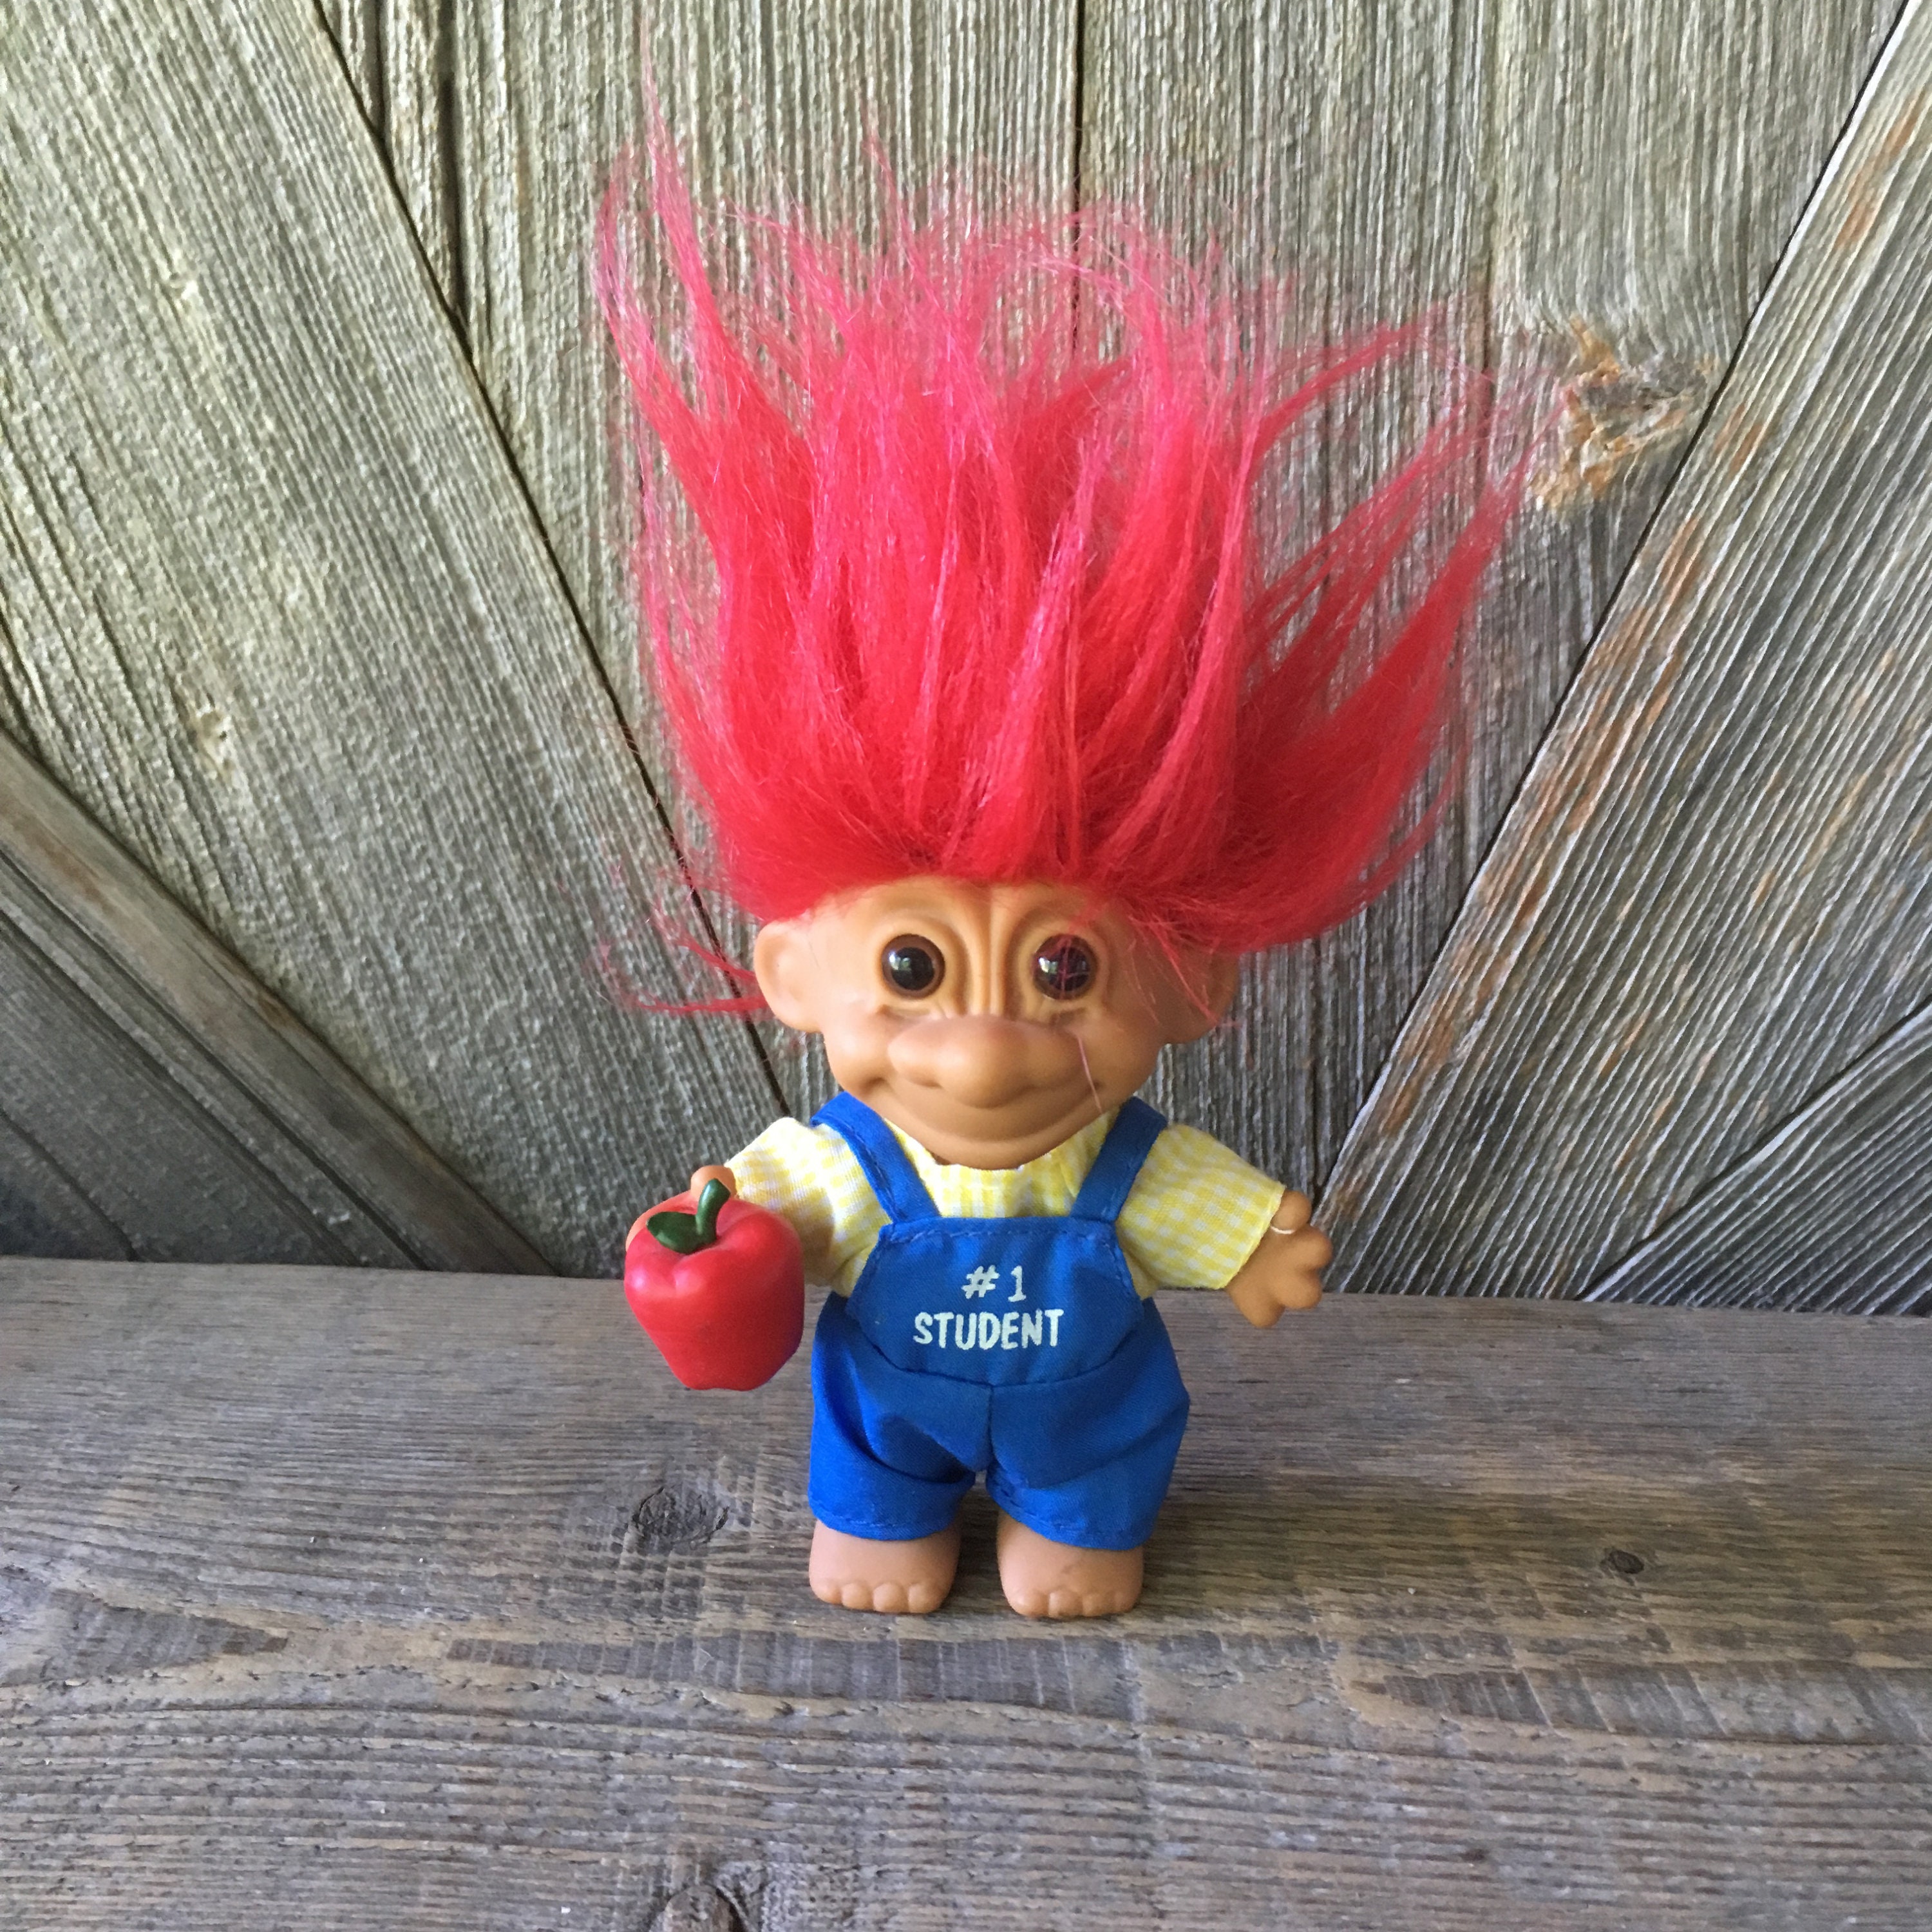 Red Hair 5" Russ Troll Doll NEW IN ORIGINAL WRAPPER #1 TEACHER 